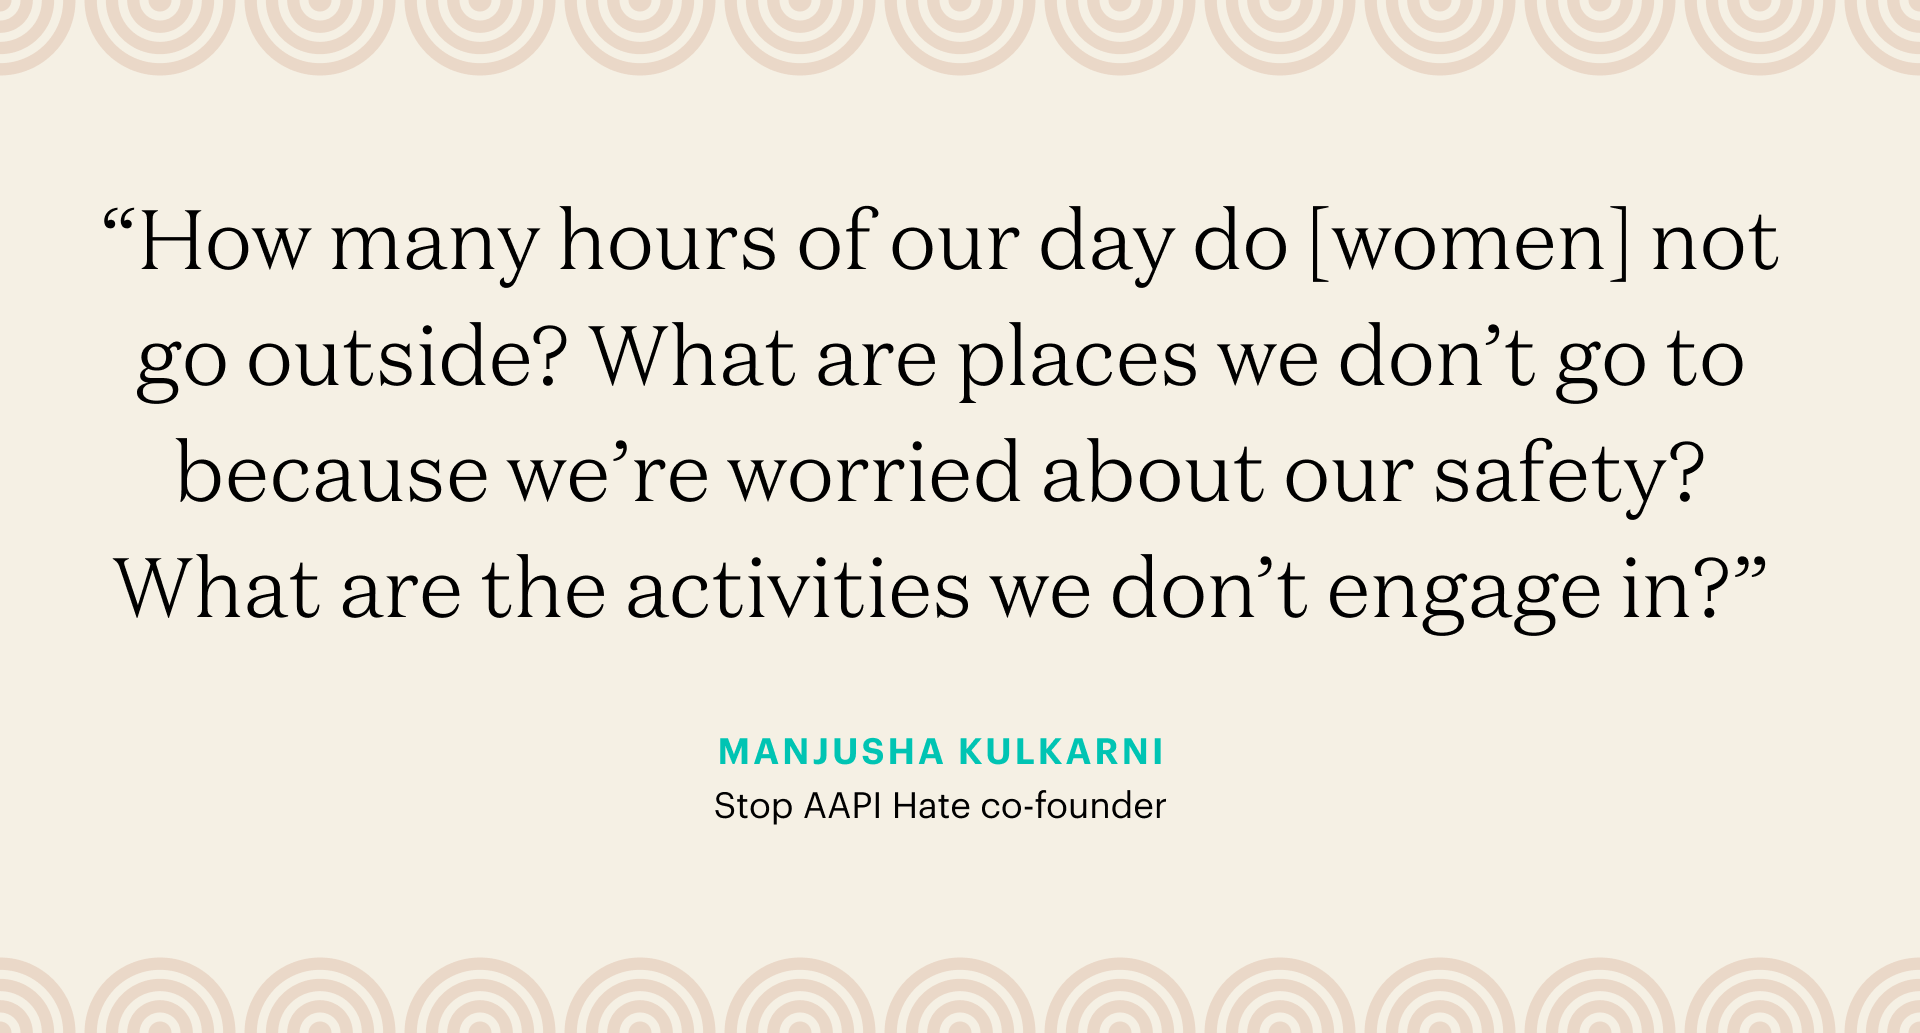 A quote from Manjusha KulKarni, Stop AAPI co-founder